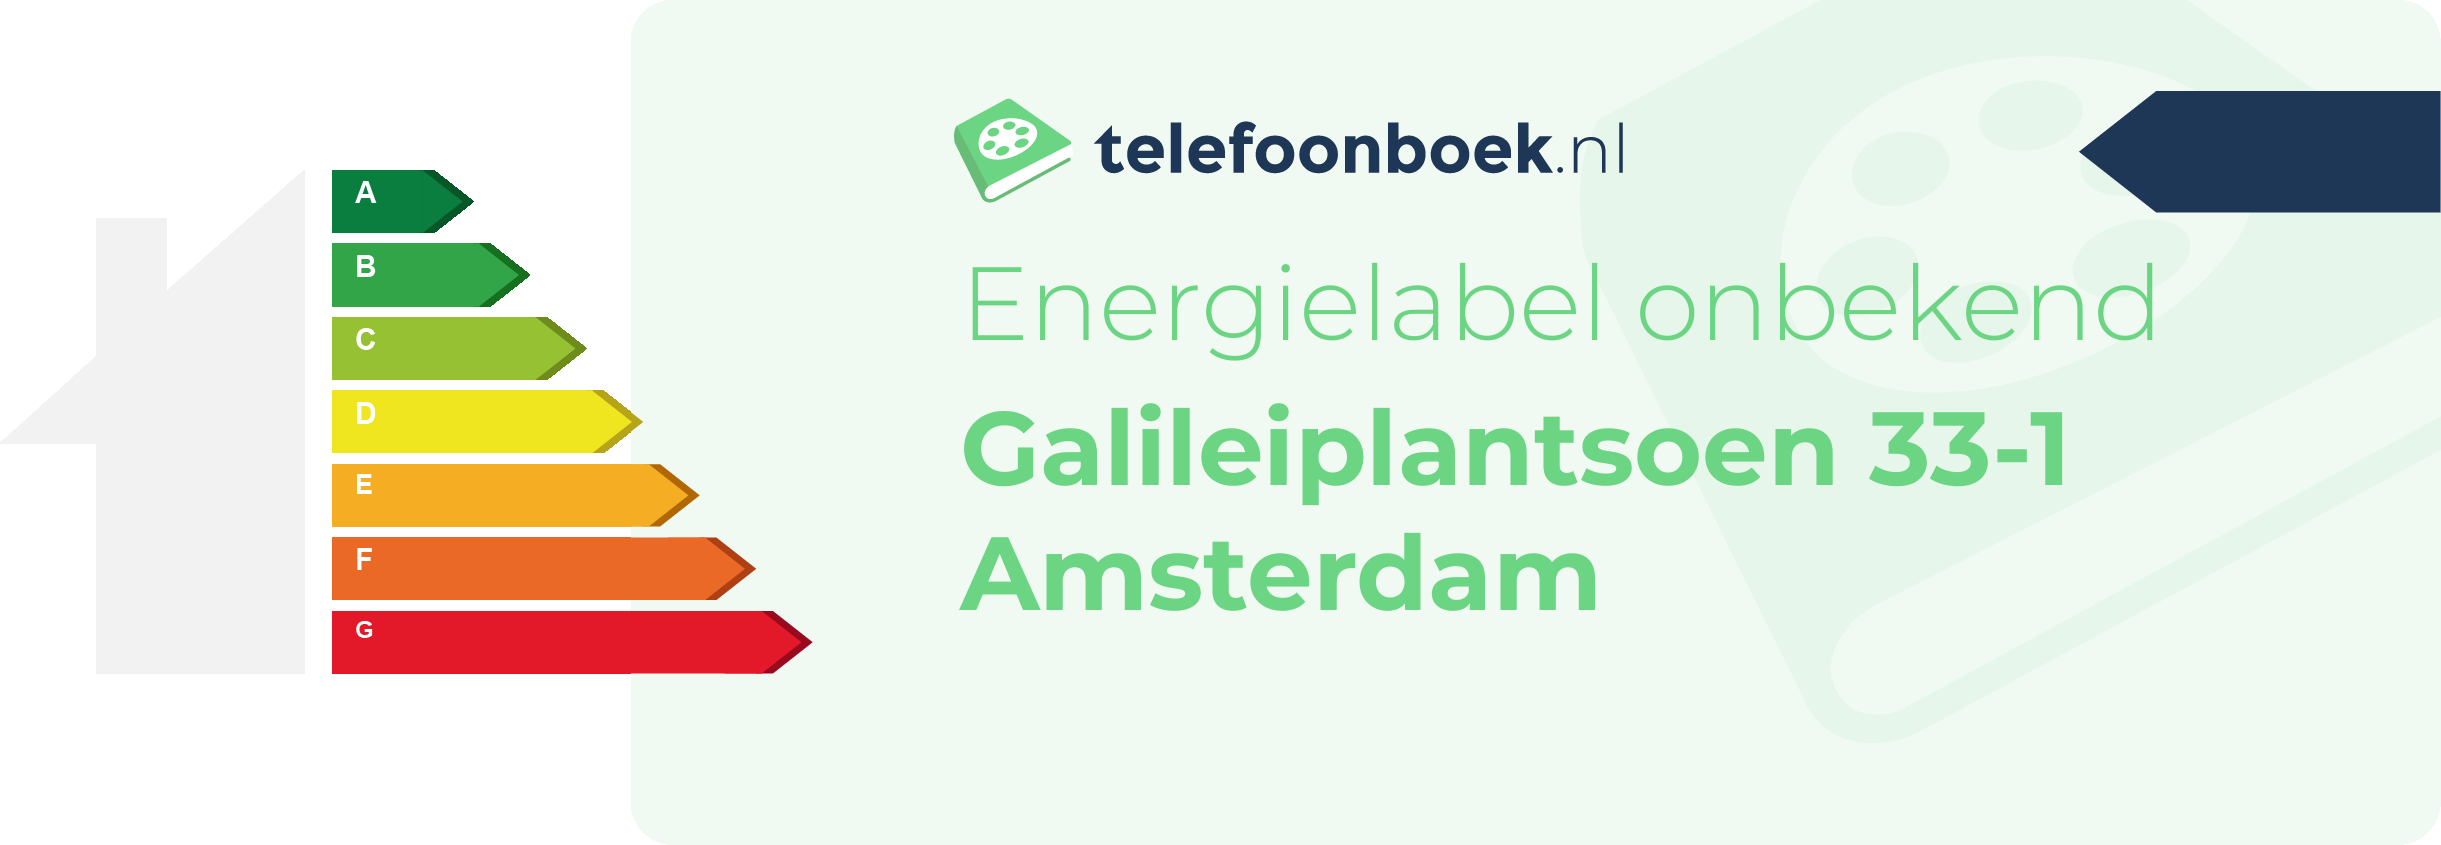 Energielabel Galileiplantsoen 33-1 Amsterdam